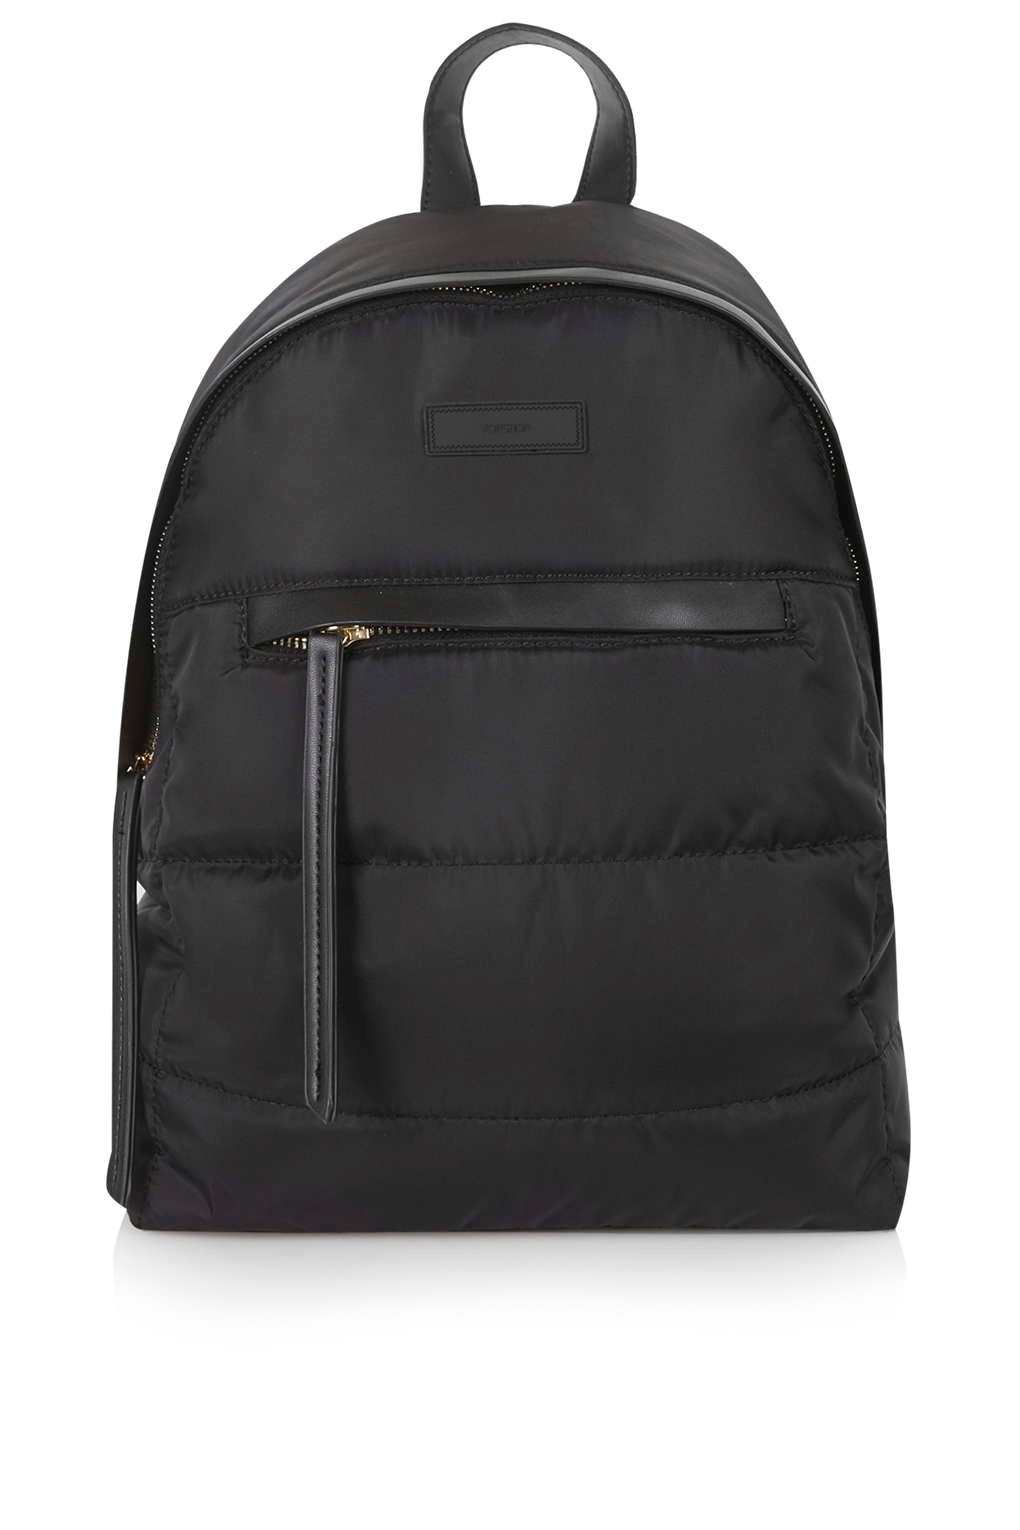 Topshop Large Nylon Backpack